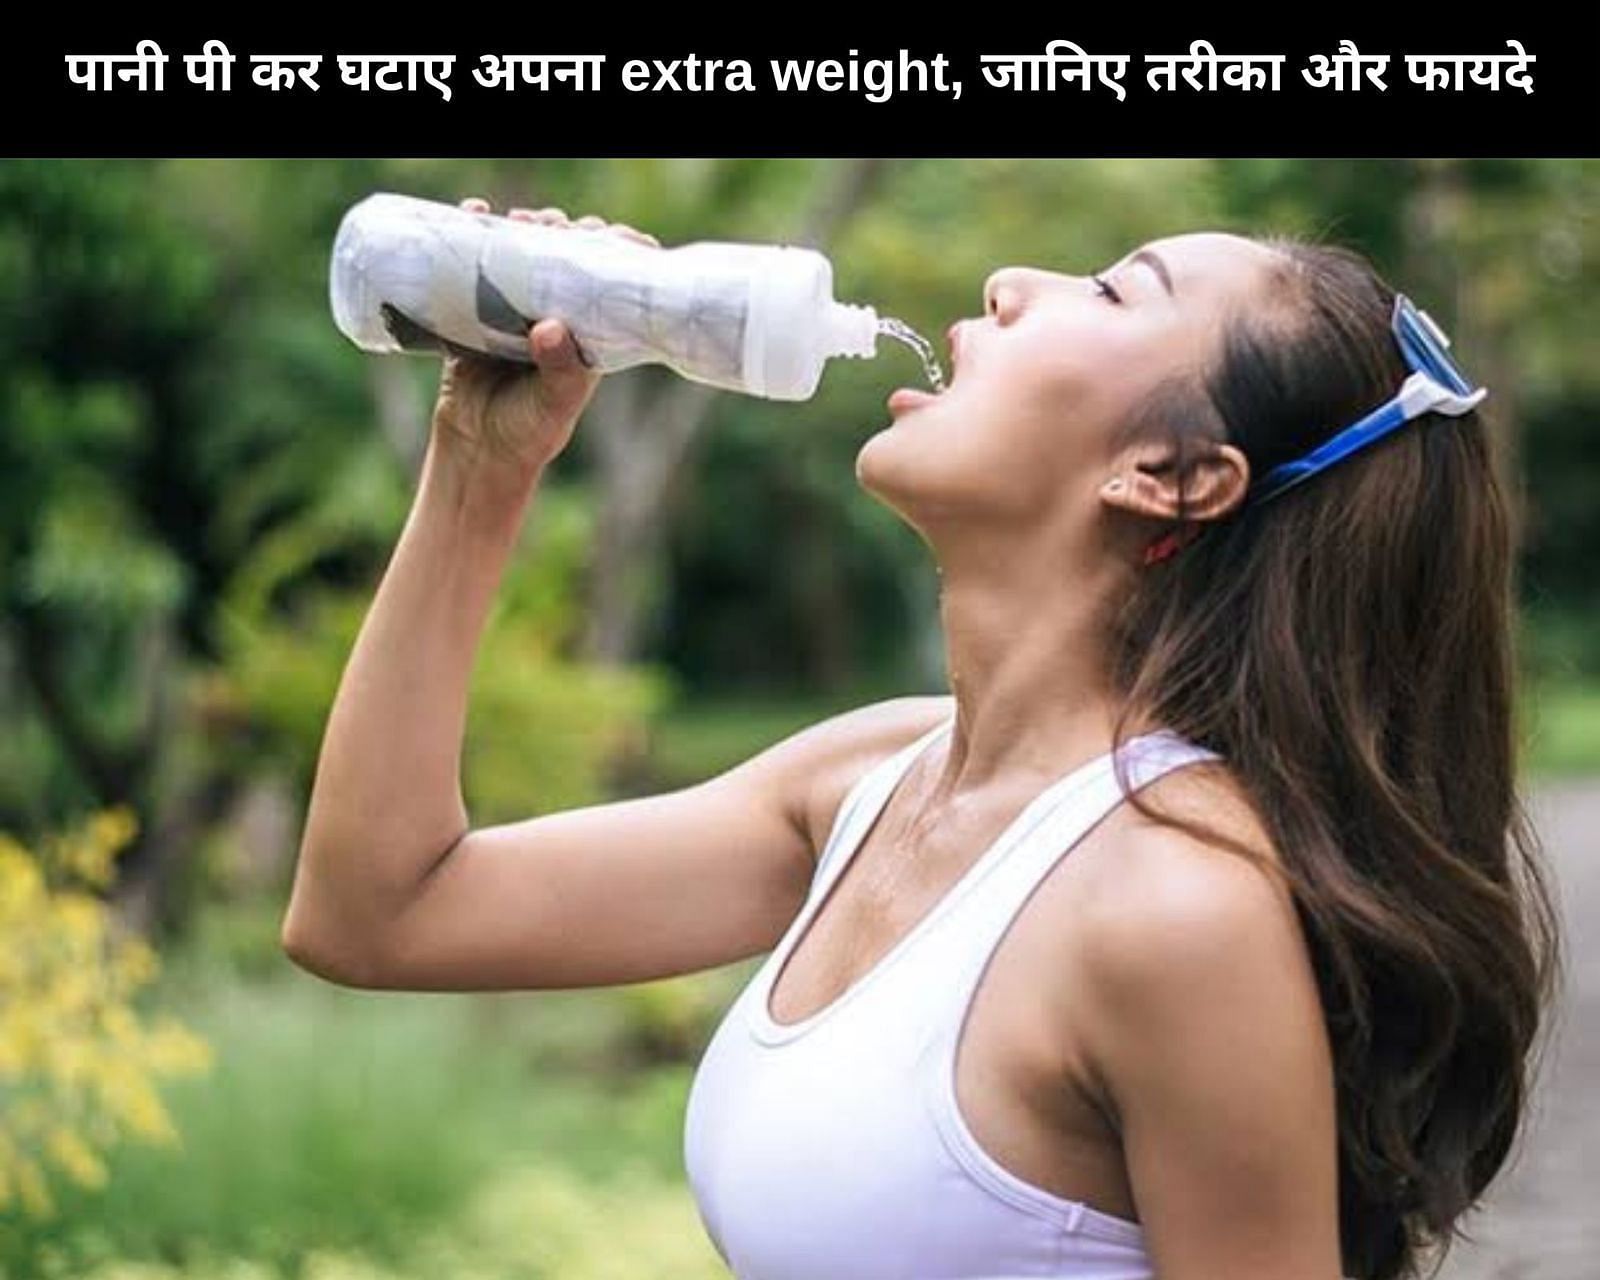 पानी पी कर घटाए अपना extra weight, जानिए तरीका और फायदे (फोटो - sportskeedaहिन्दी)